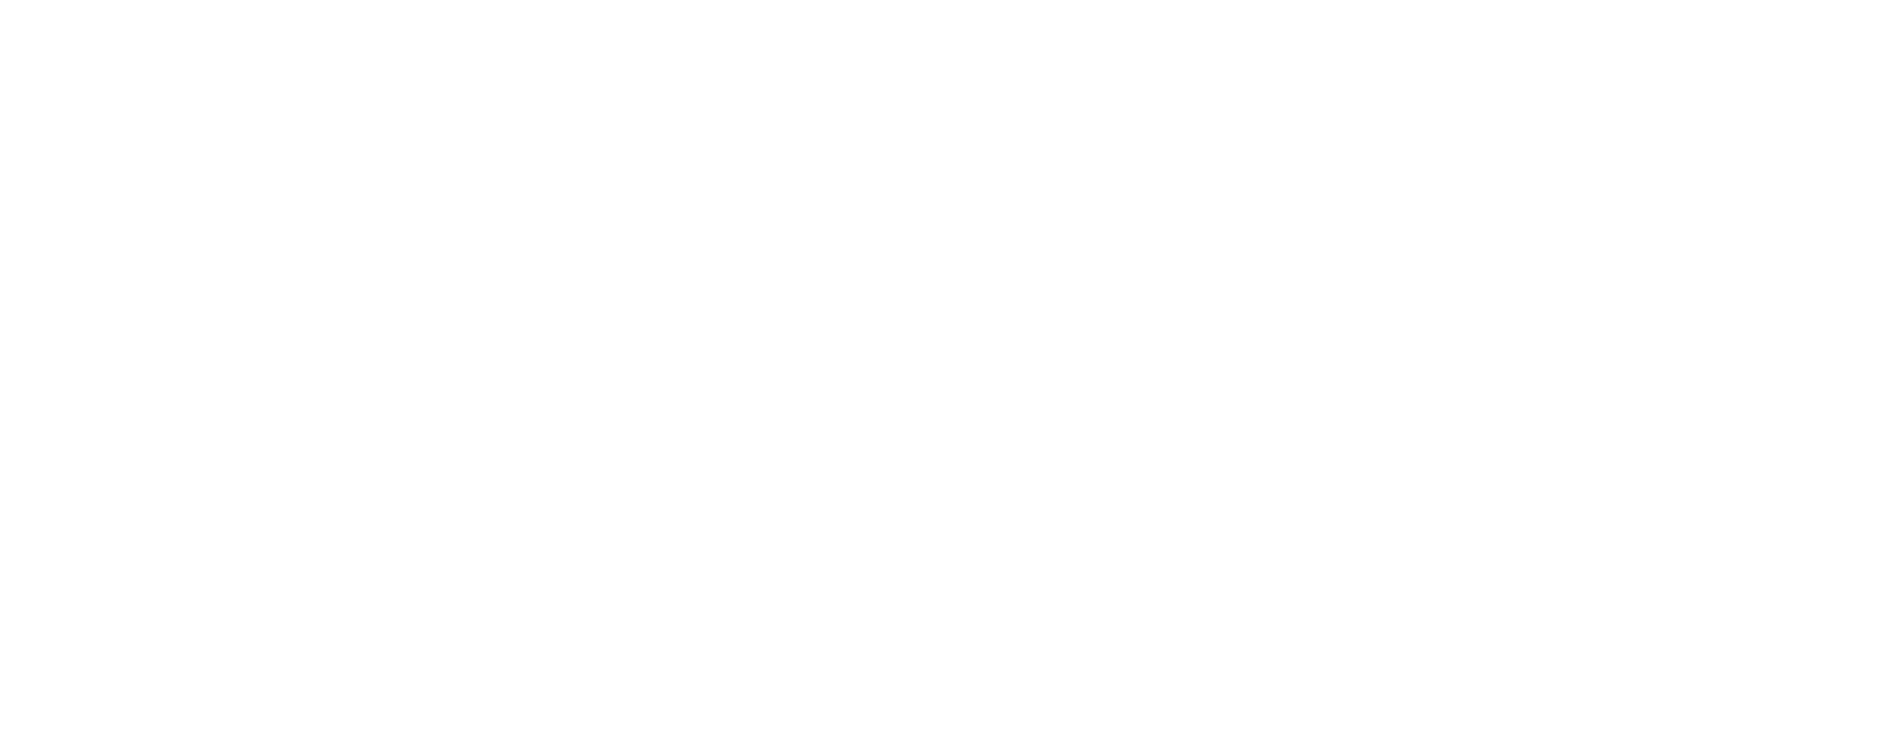 Development and Alumni Relations